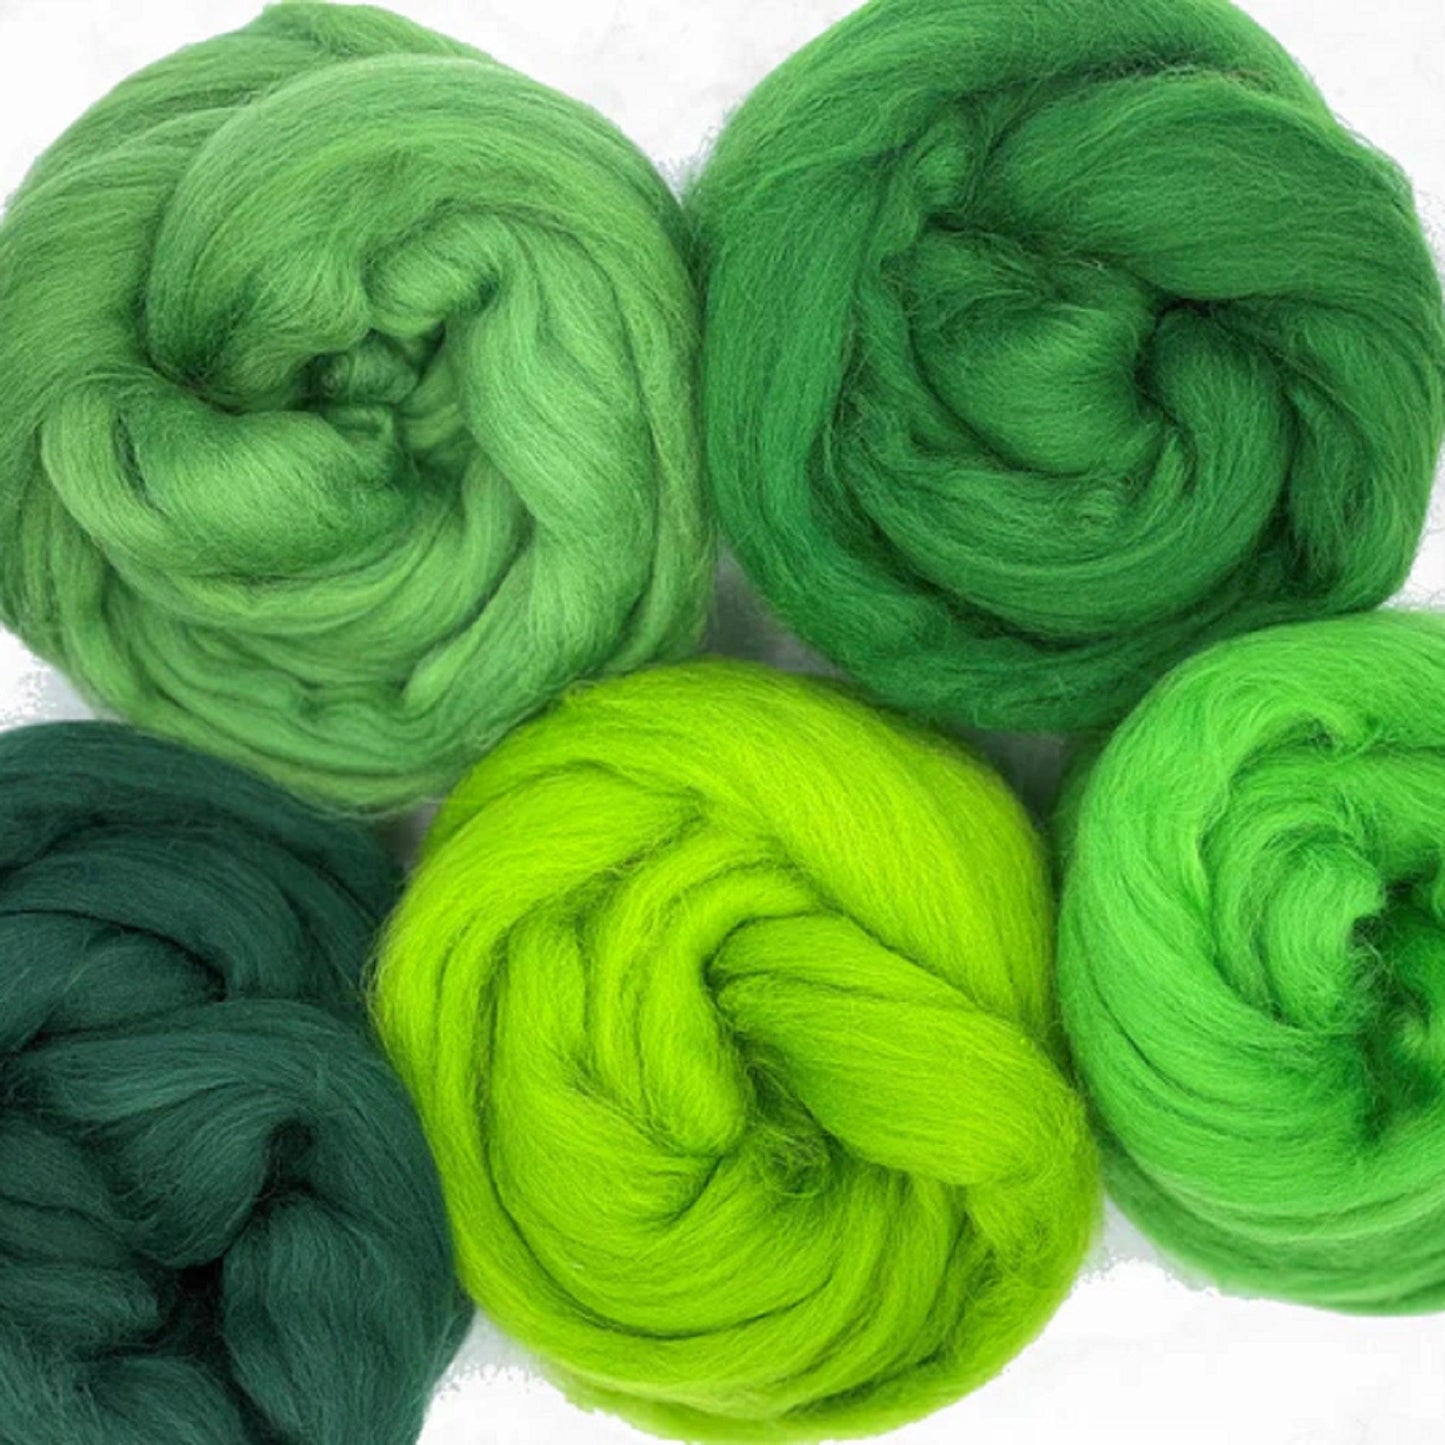 Mixed Merino Wool Variety Pack | Grand Green (Greens) 250 Grams, 23 Micron